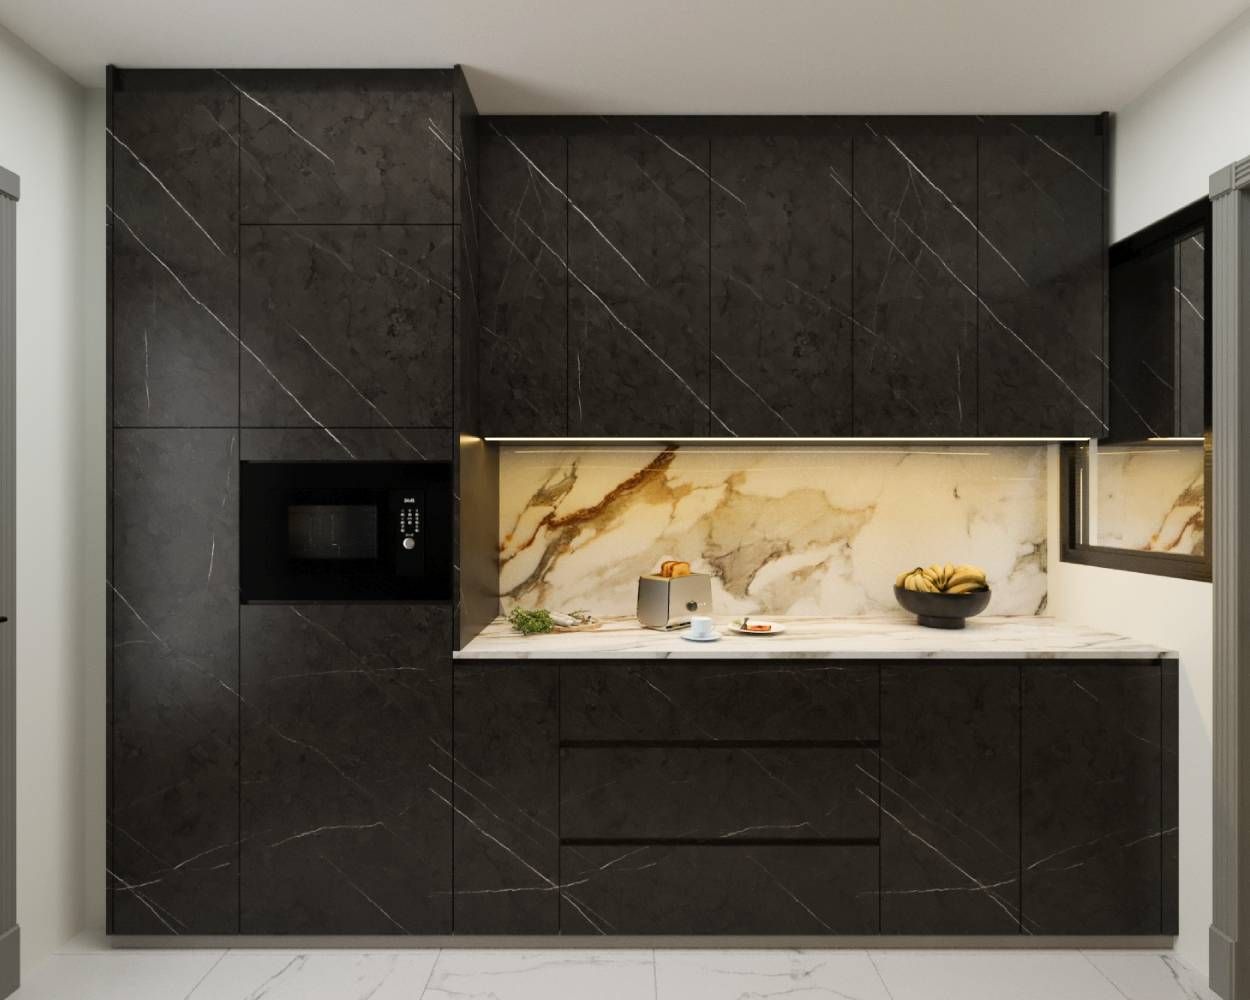 Contemporary Black Parallel Kitchen Design With White Marble Kitchen Backsplash